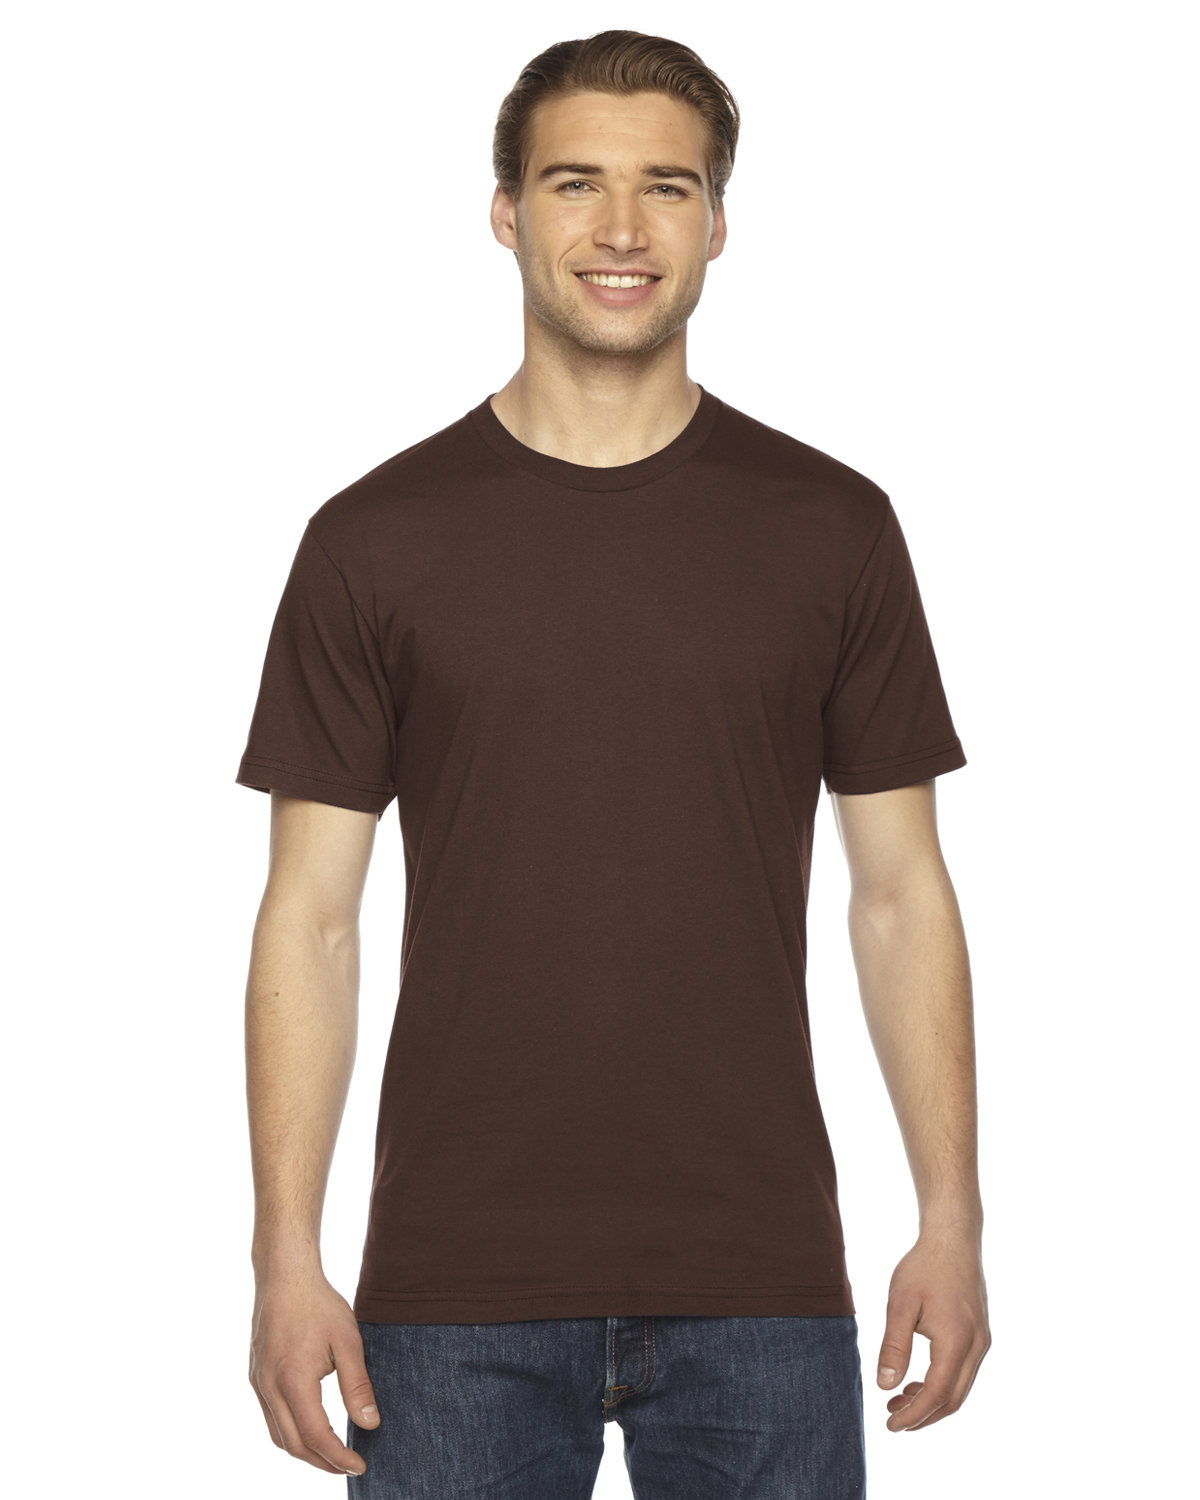 American Apparel Unisex Fine Jersey Short-Sleeve T-Shirt BROWN 